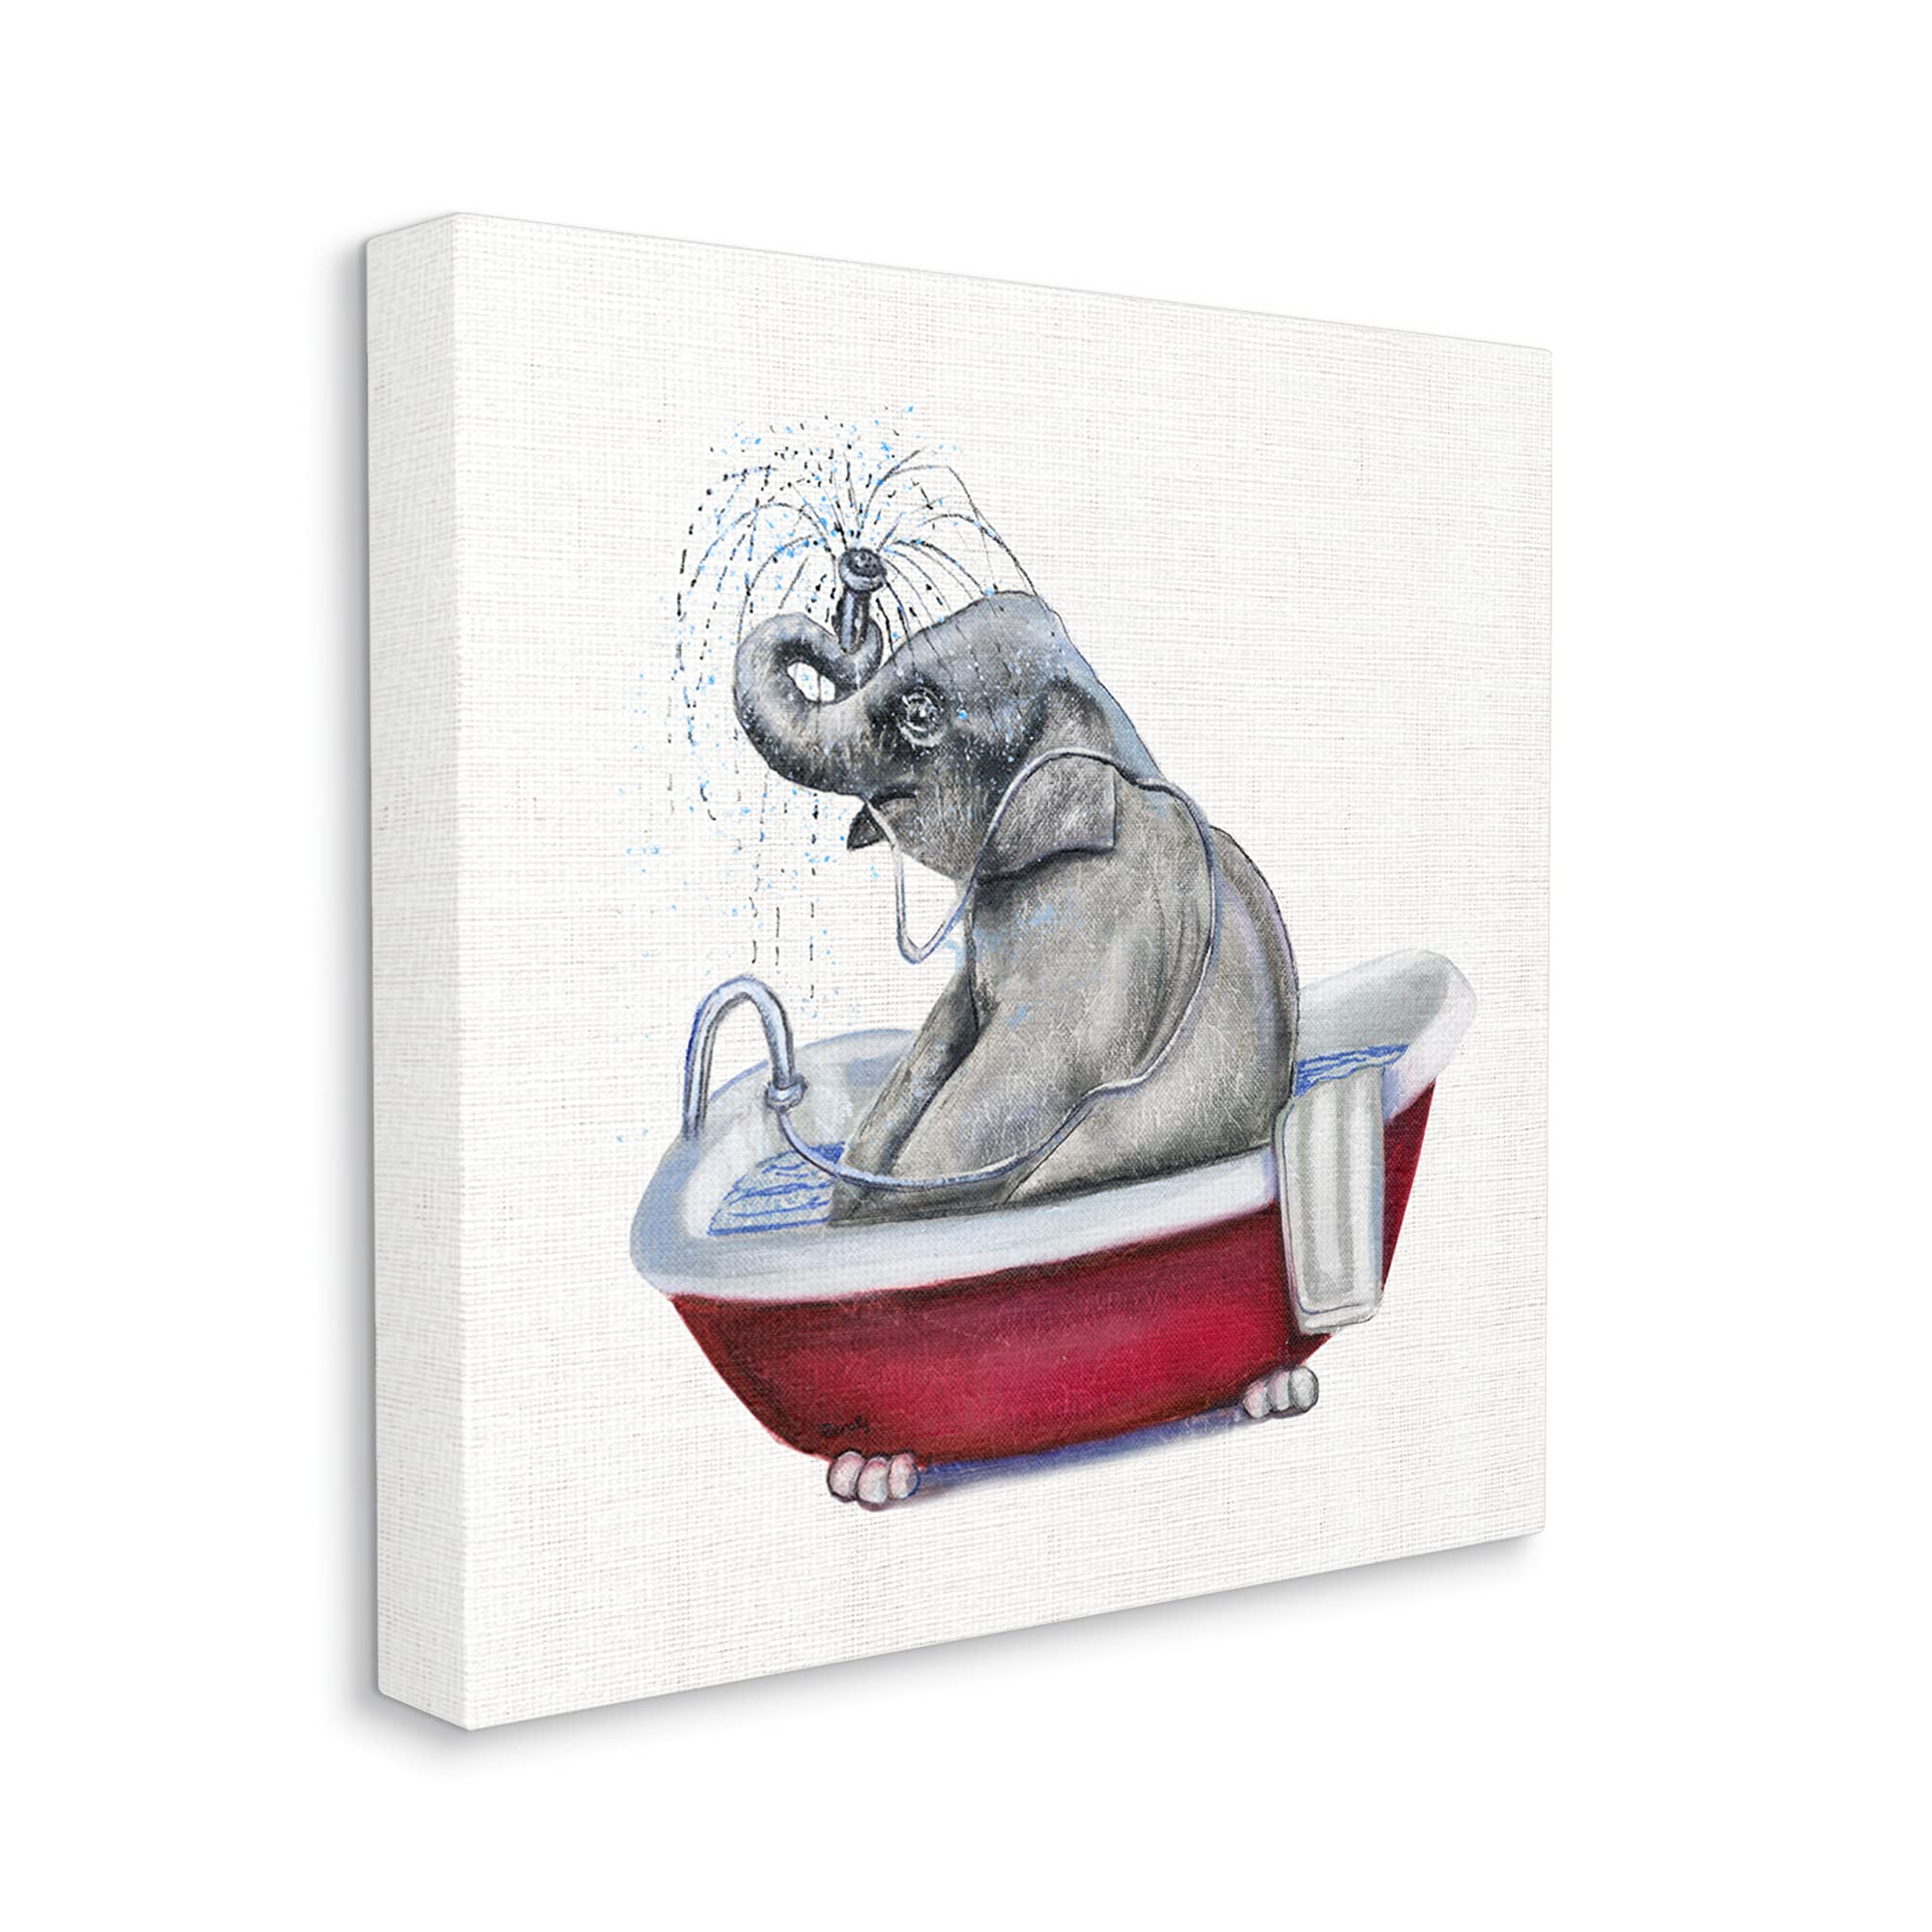 Stupell Industries Elephant in Red Bathtub Playful Safari Animal, Designed by Donna Brooks Canvas Wall Art, 24 x 24, Grey